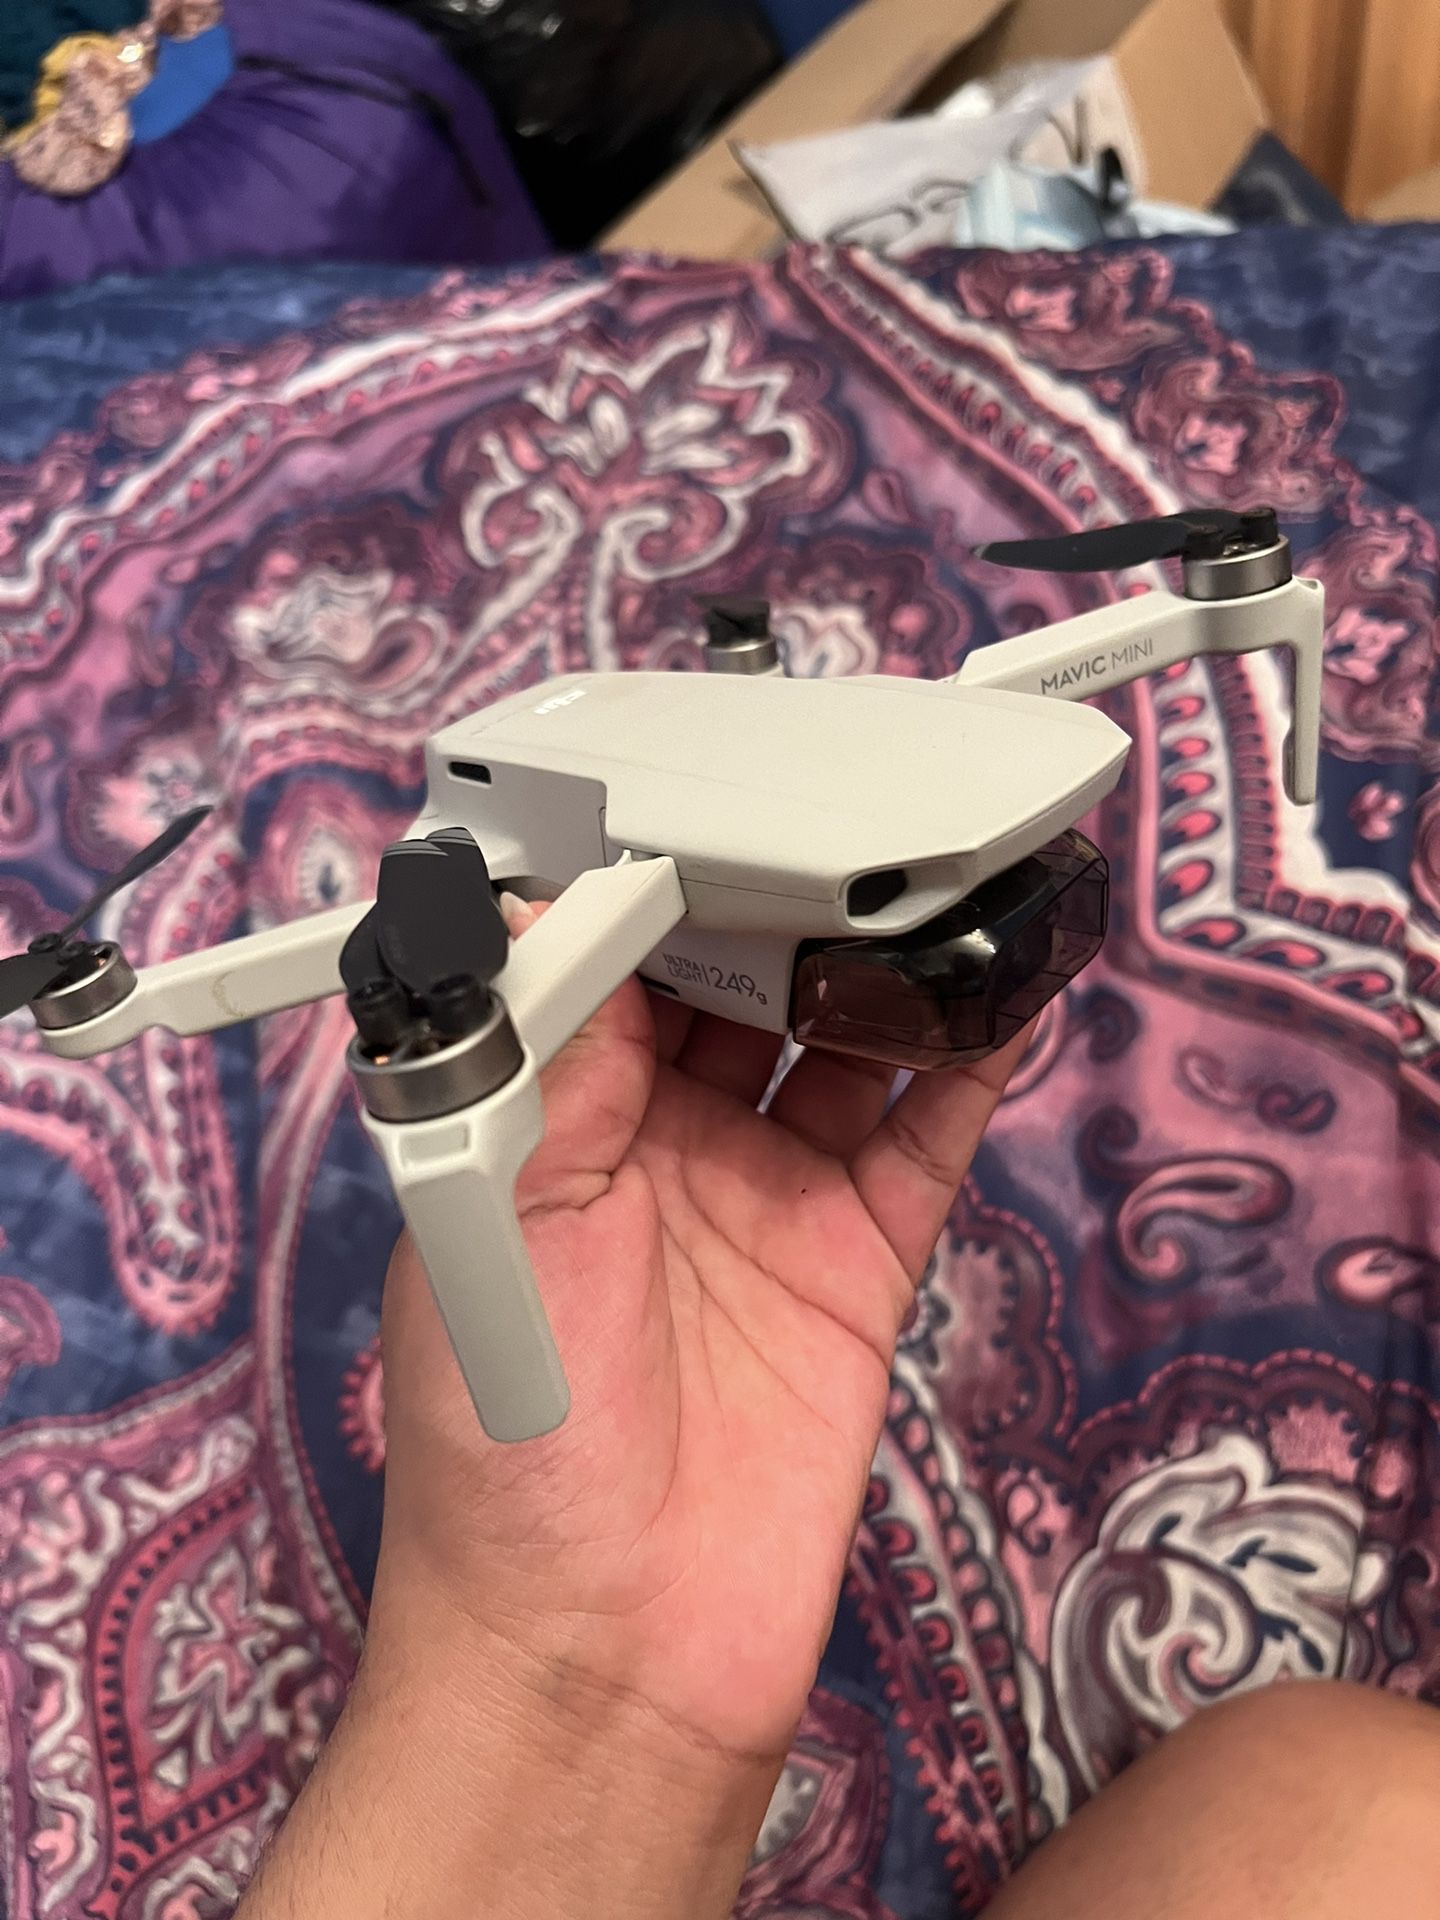 DJI Drone Mini SE